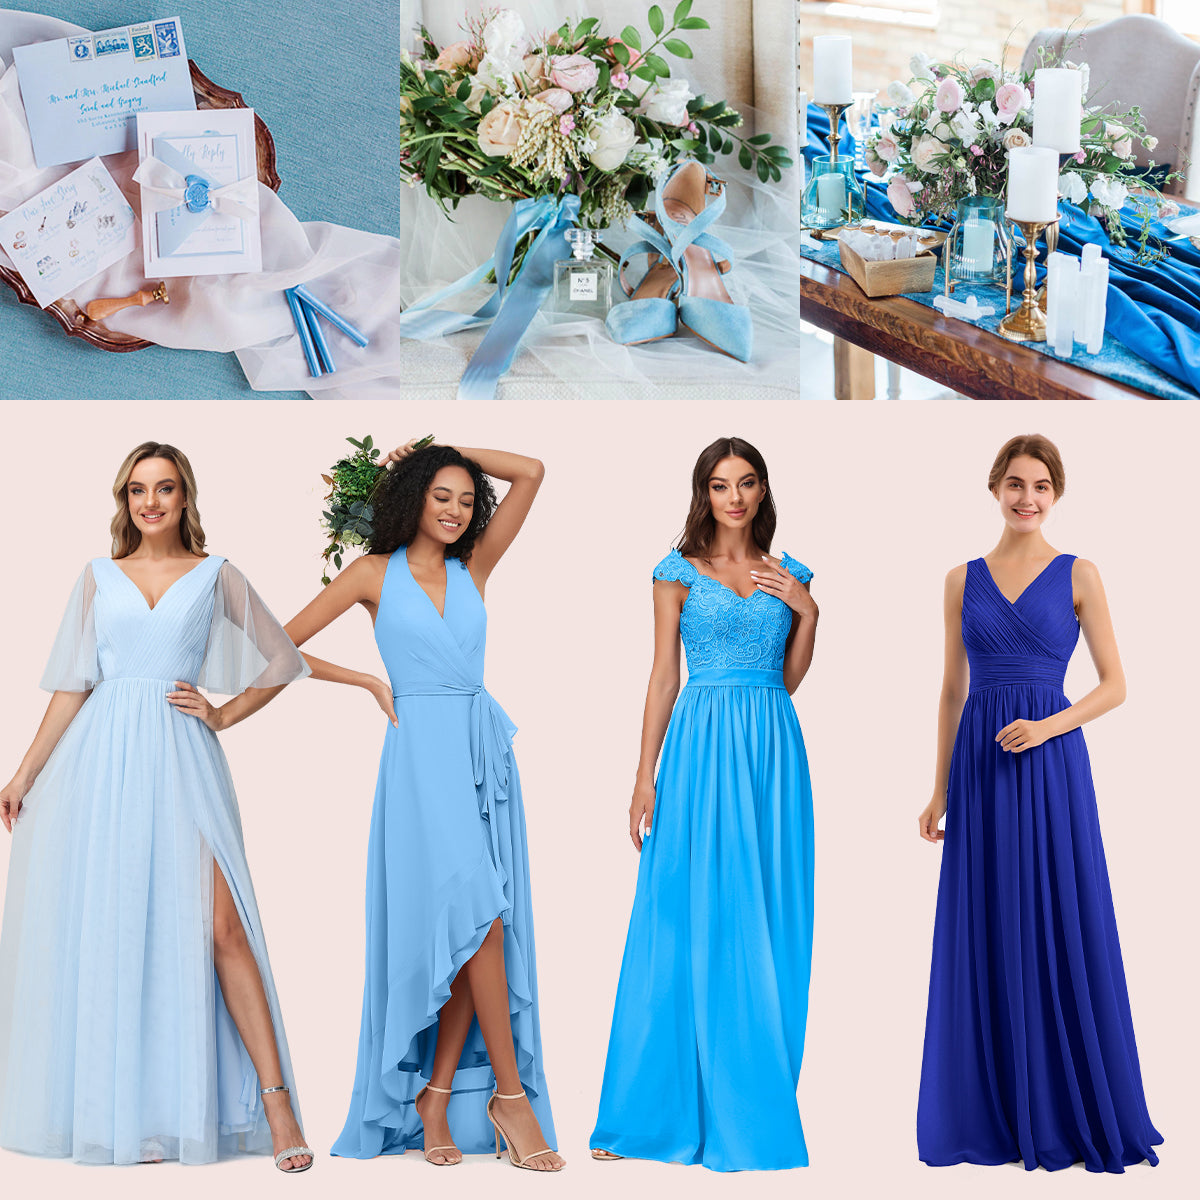 BLUE BRIDESMAID DRESSES